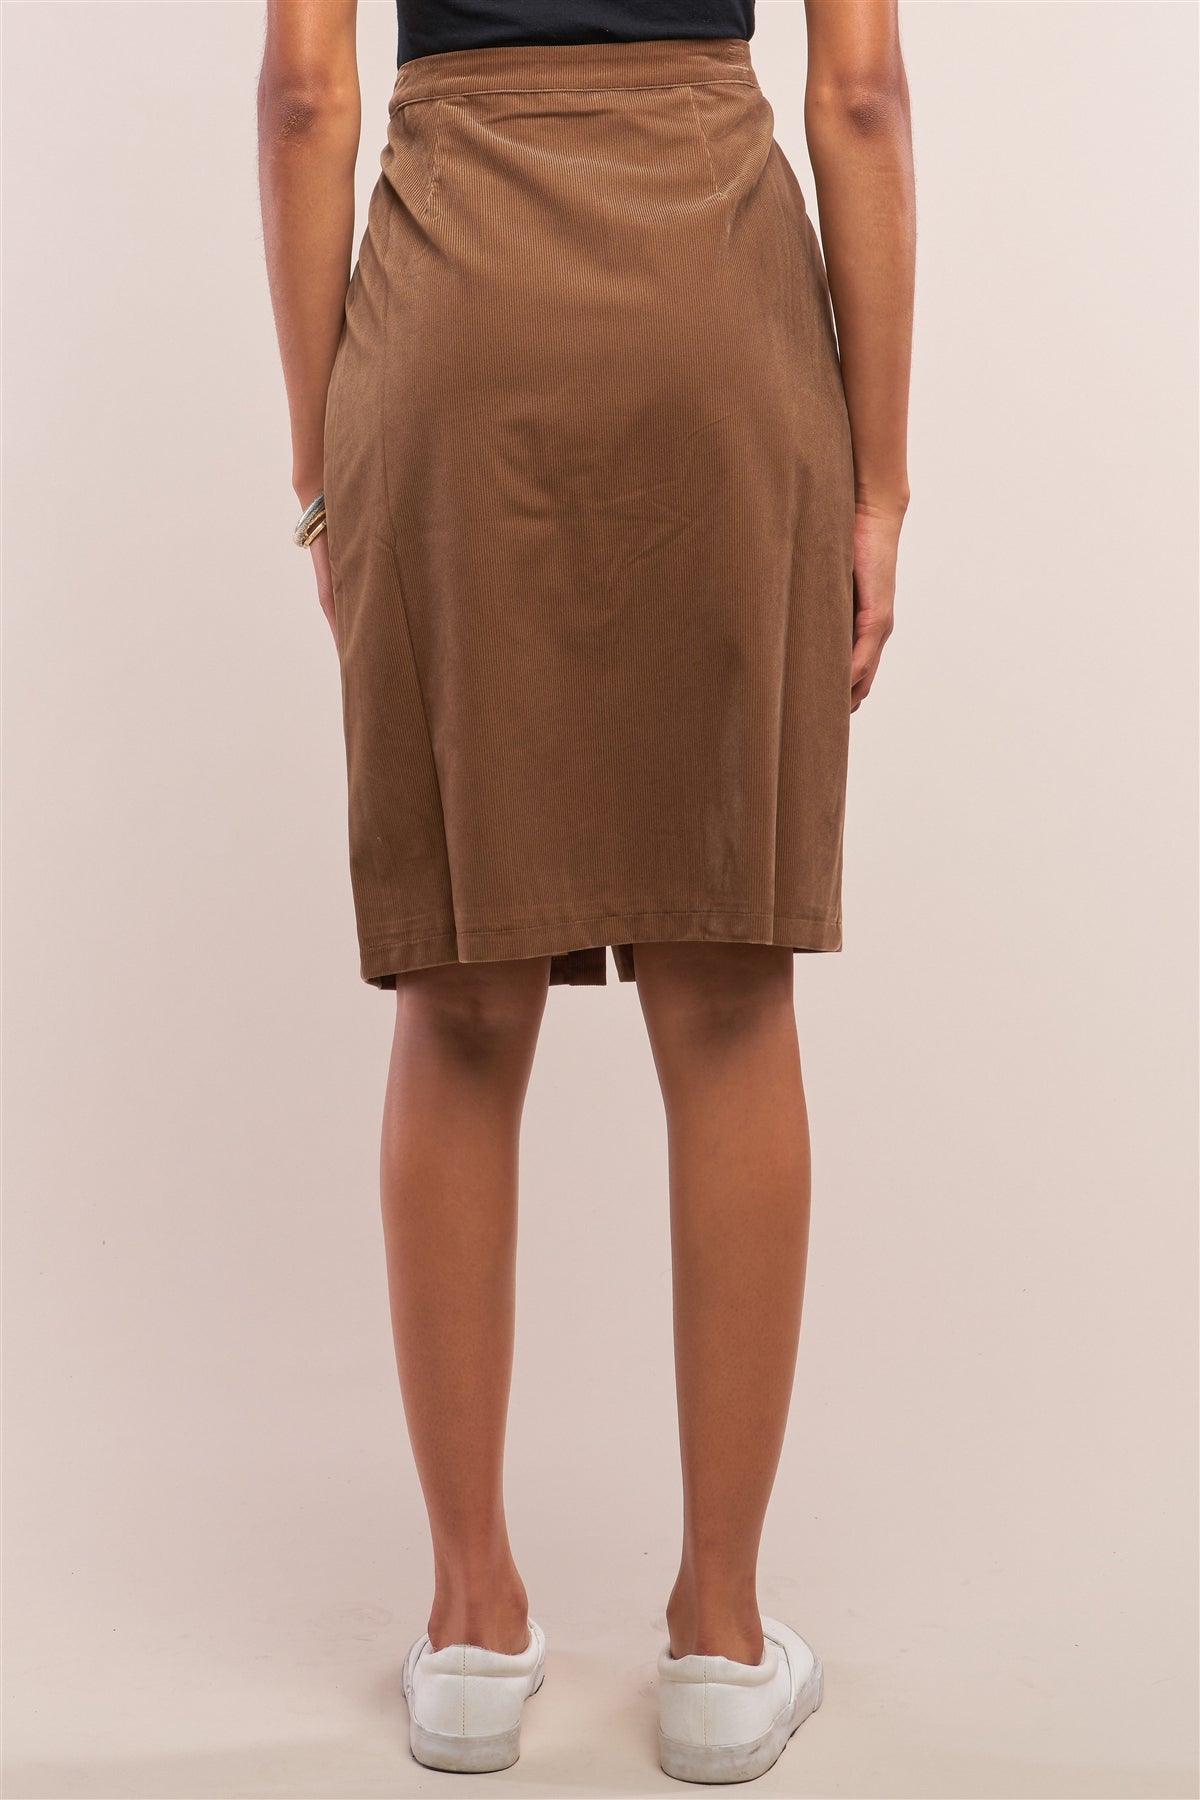 Peanut Brown High Waisted Corduroy Button Down Pencil Mini Skirt /1-2-2-1